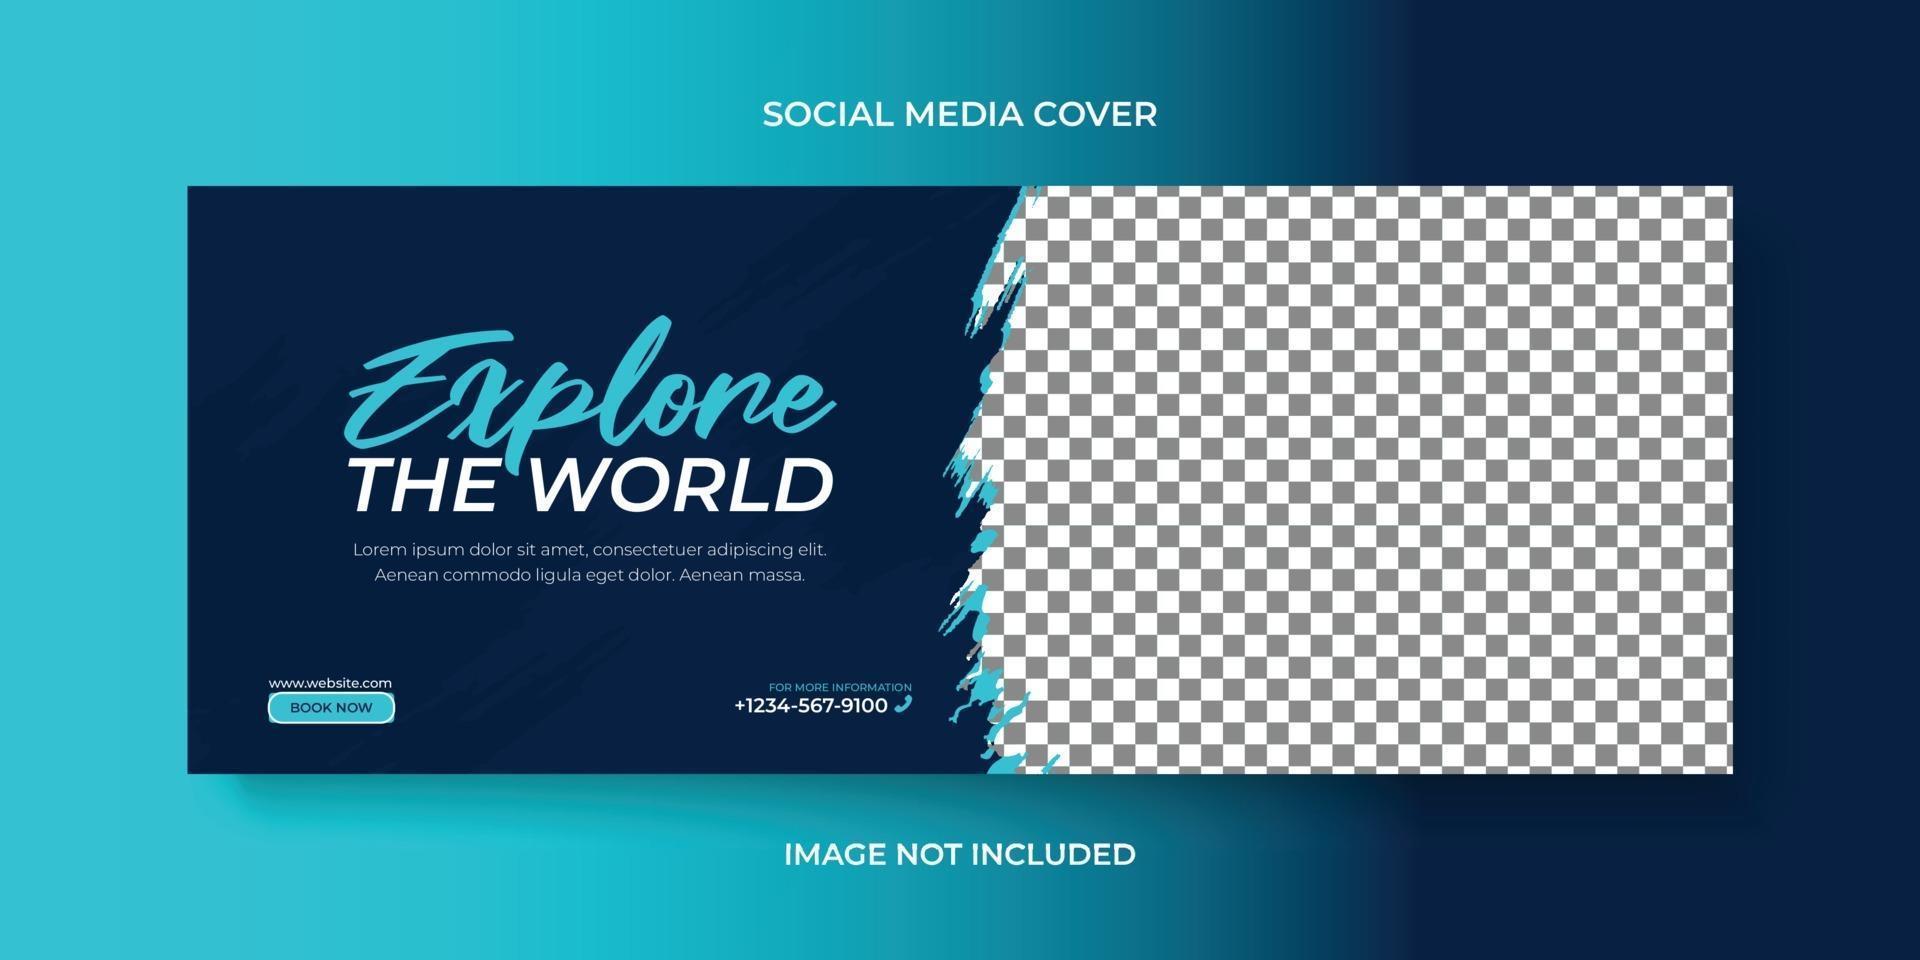 Tour travel social media cover or banner, web banner template design vector